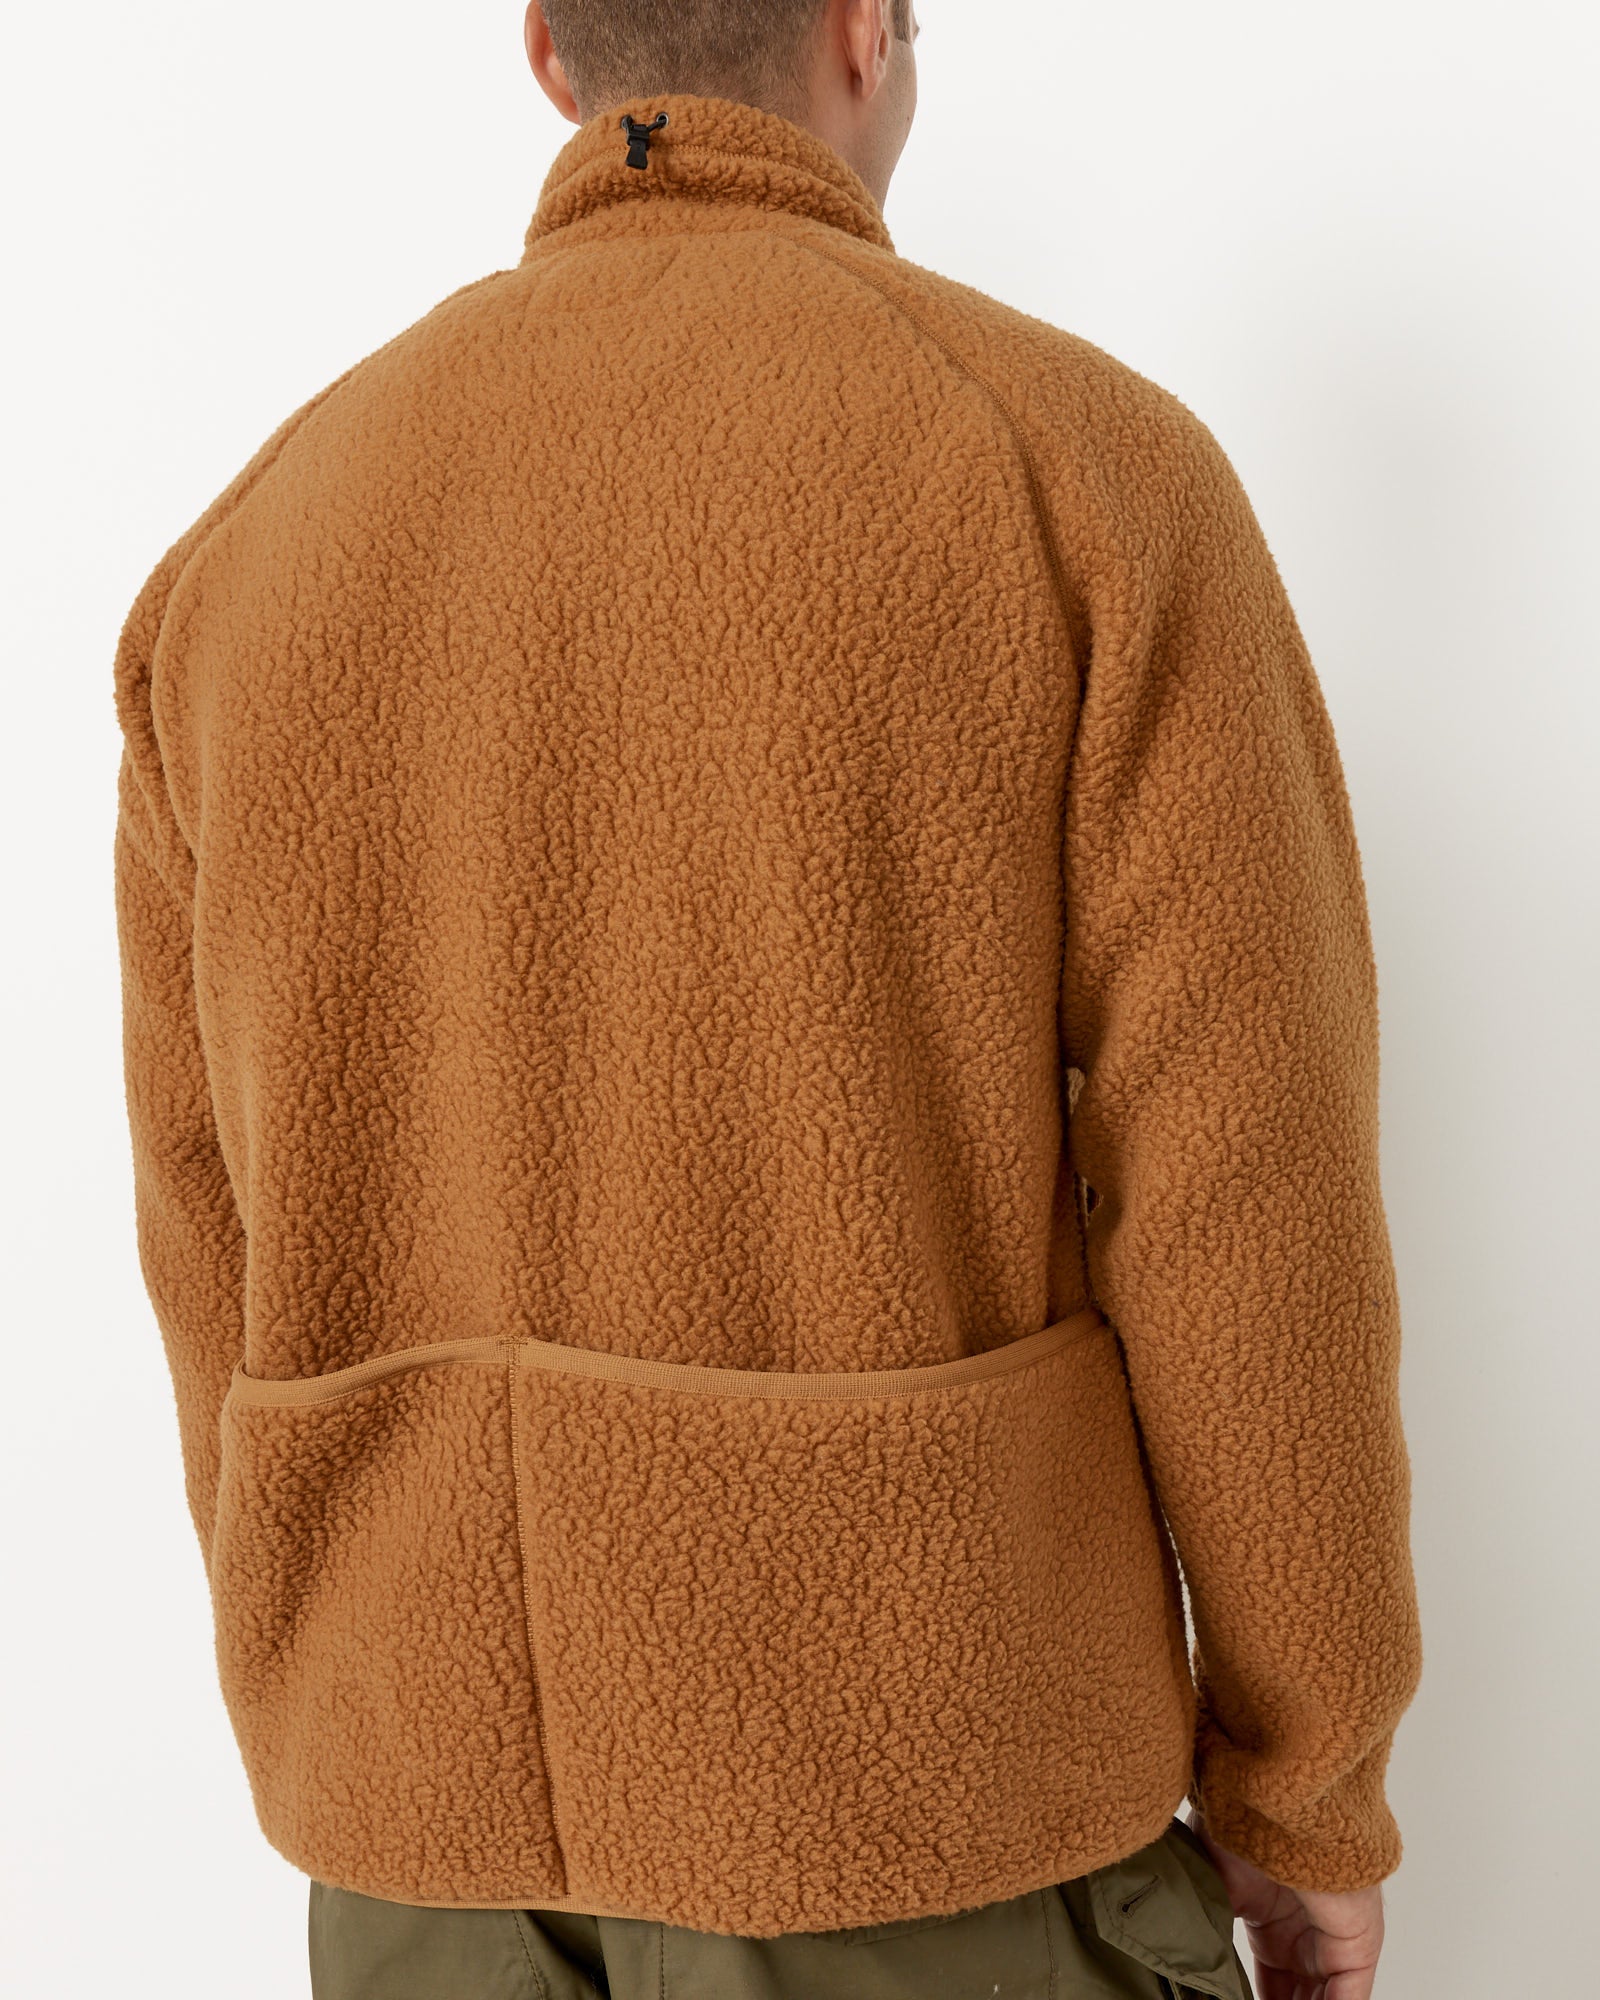 Thermal Boa Fleece Jacket in Black in Brown